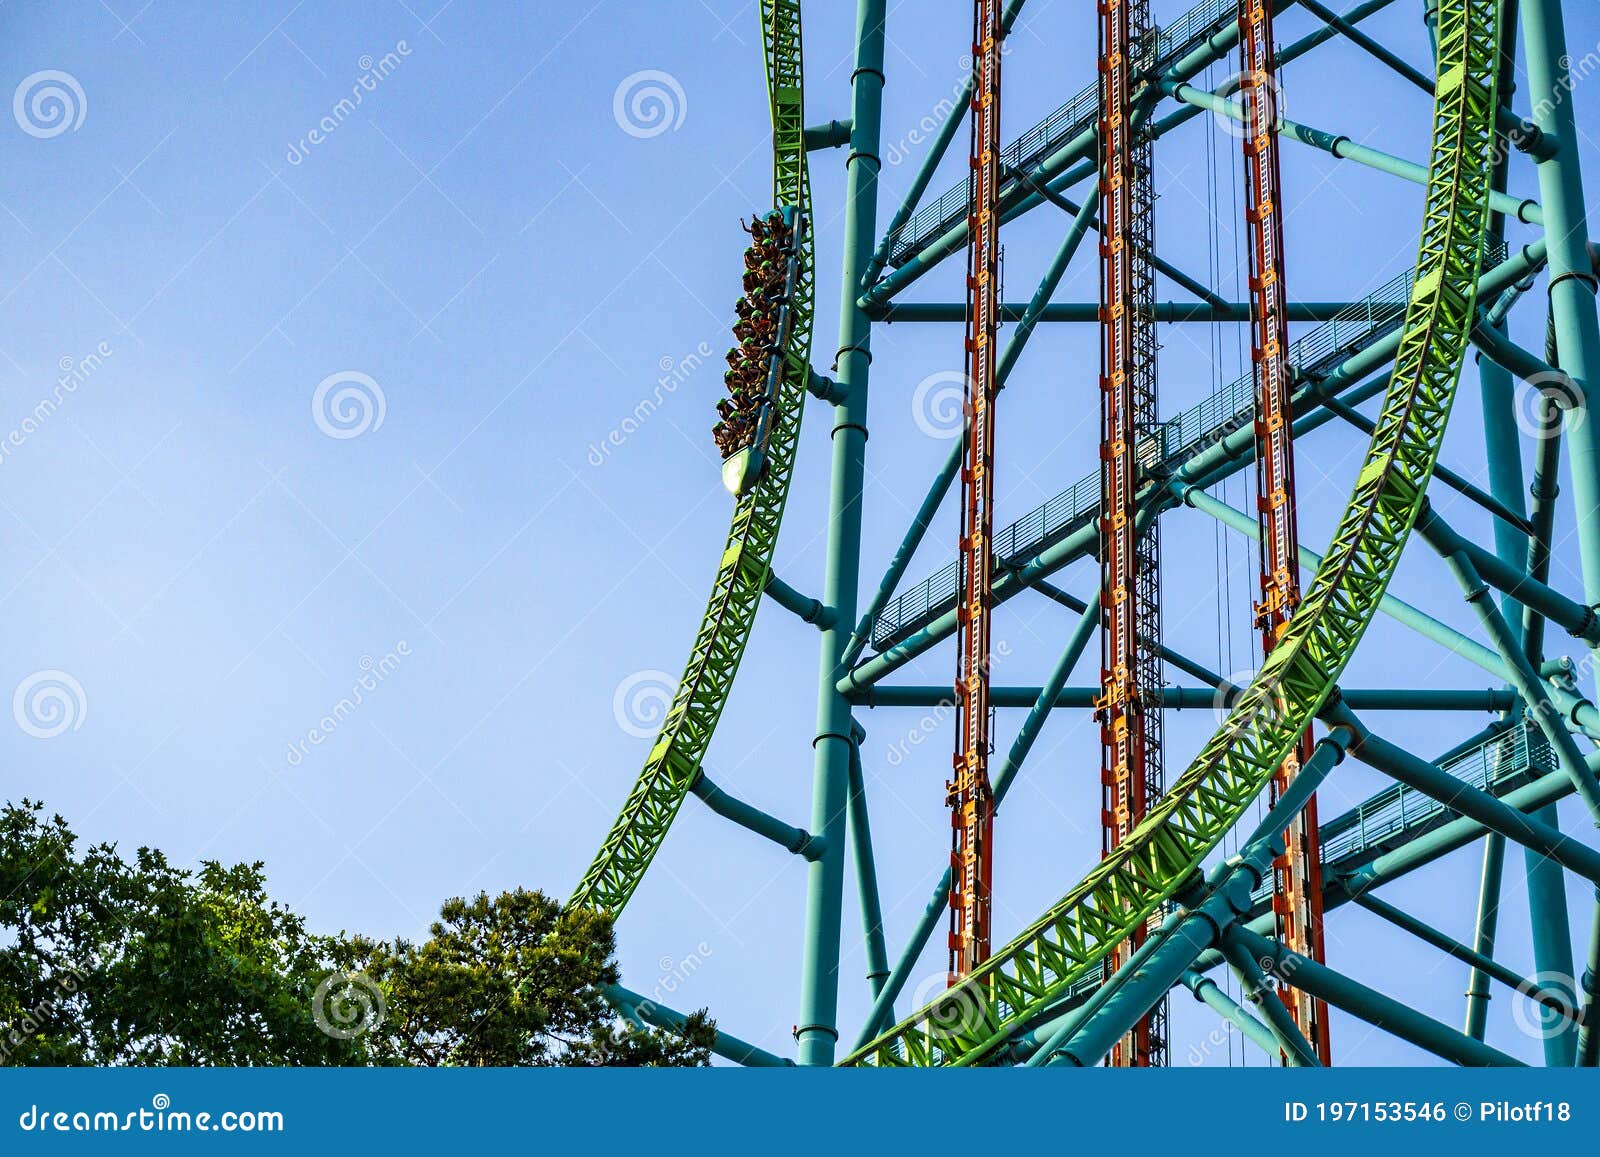 Kingda Ka Roller Coaster (Six Flags Great Adventure Theme Park